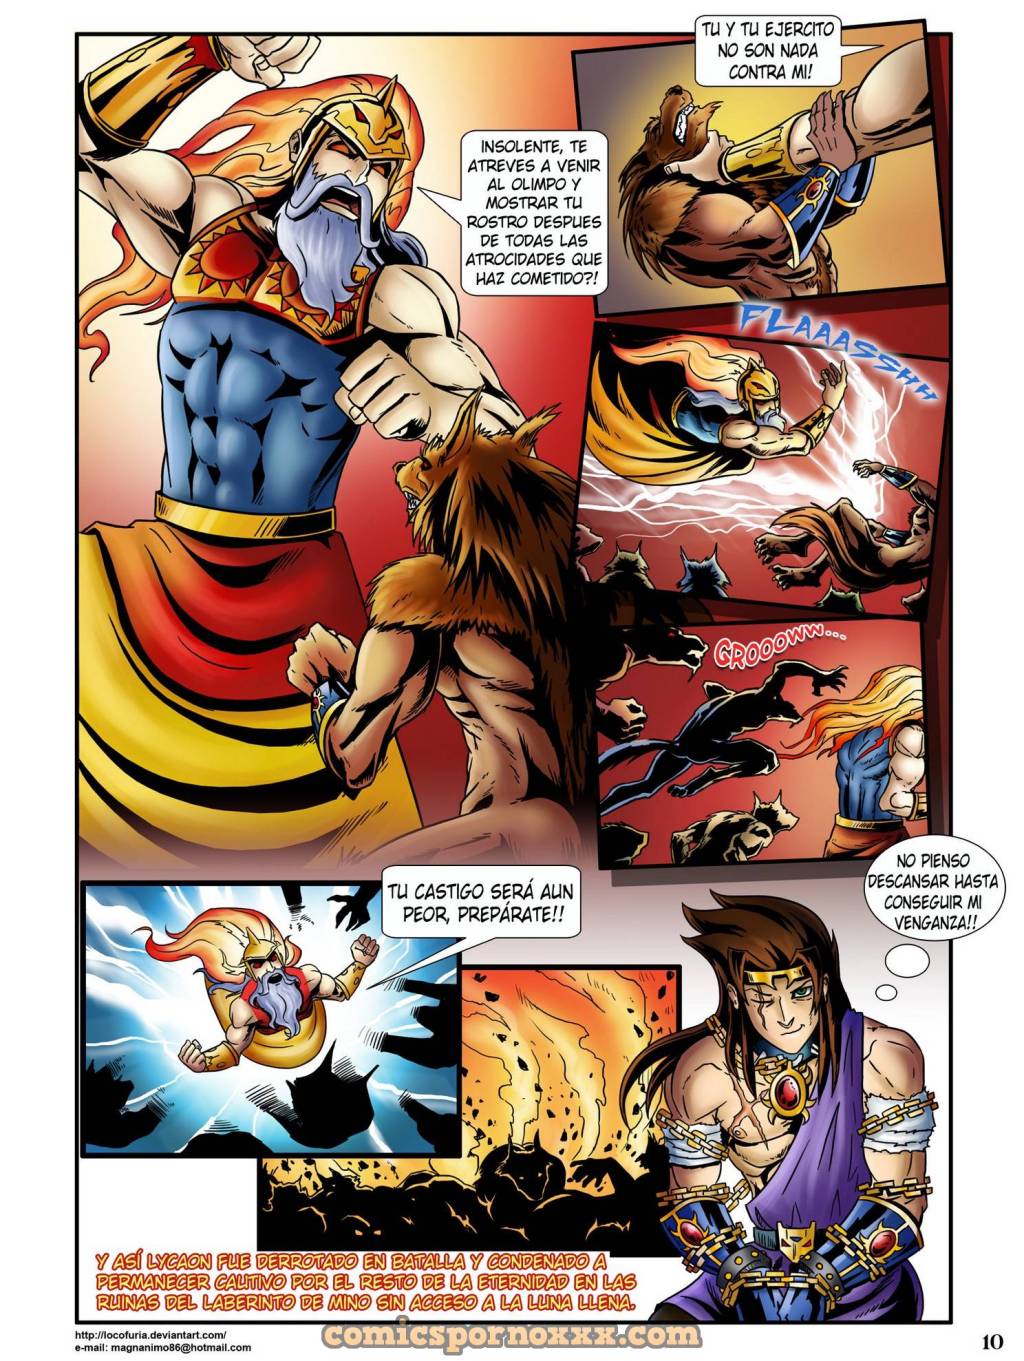 El Dios Lobo #1 (Lycaon) - 11 - Comics Porno - Hentai Manga - Cartoon XXX